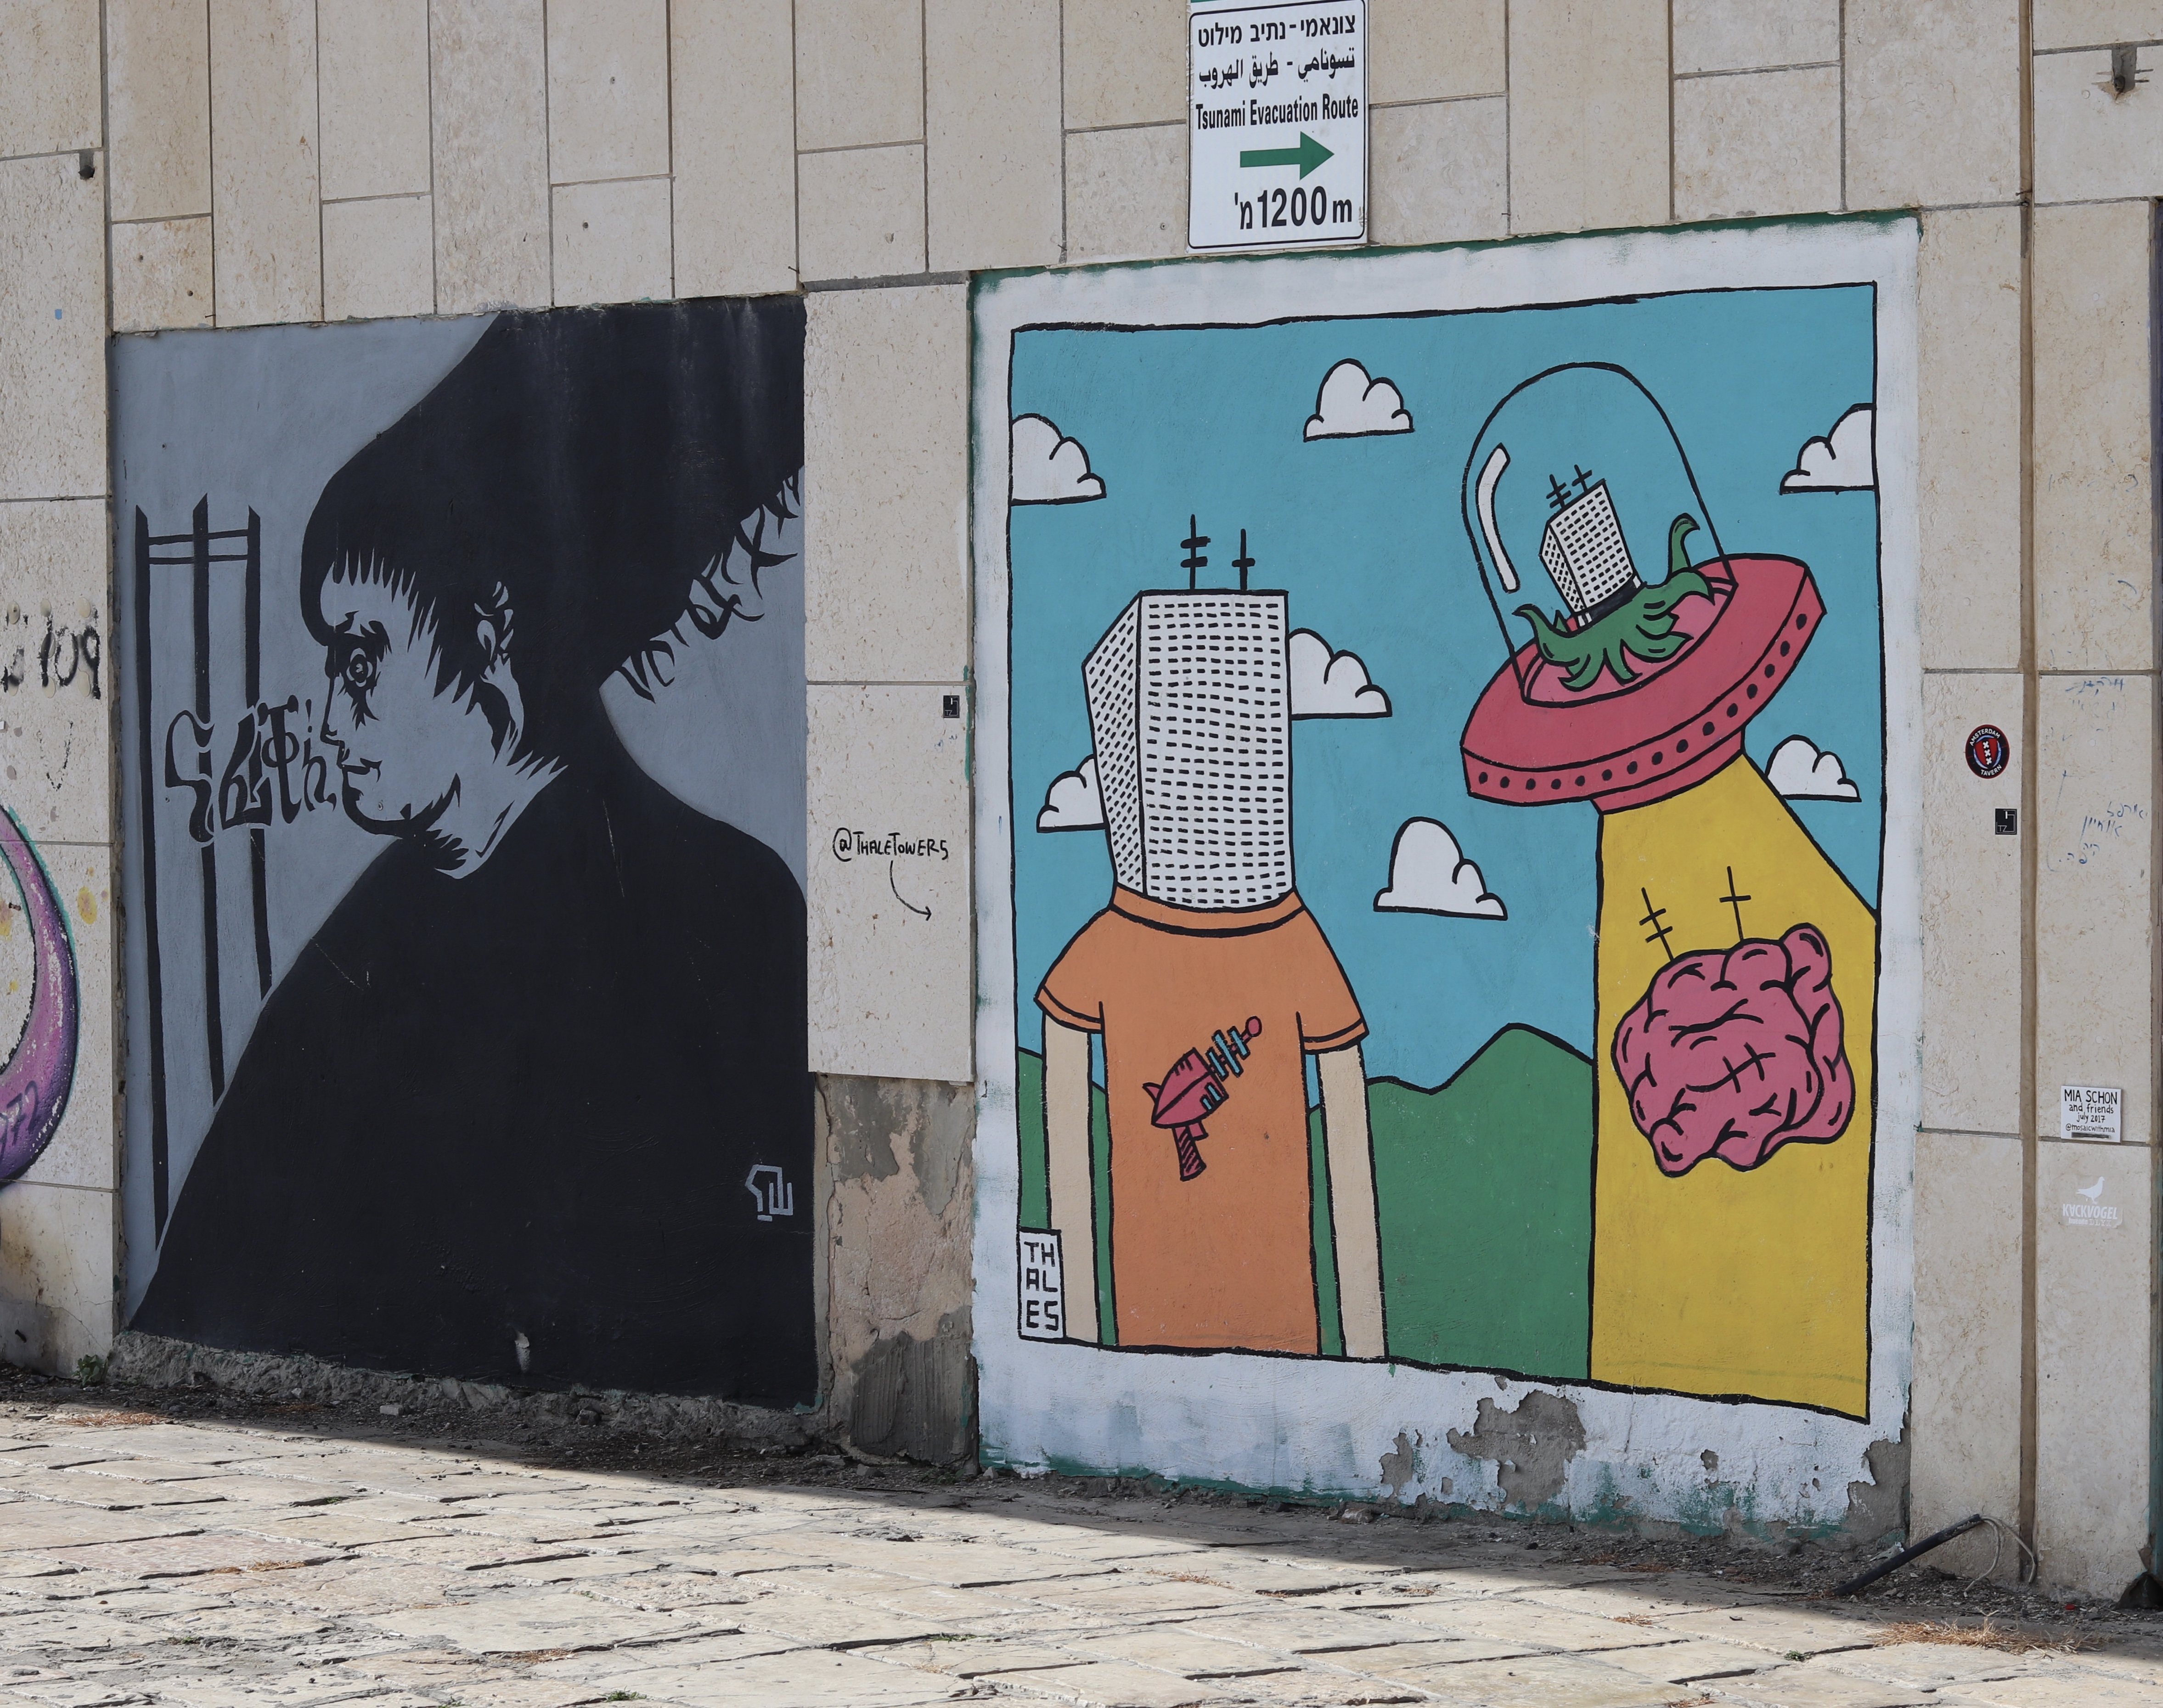 Street art near the beach in Tel Aviv